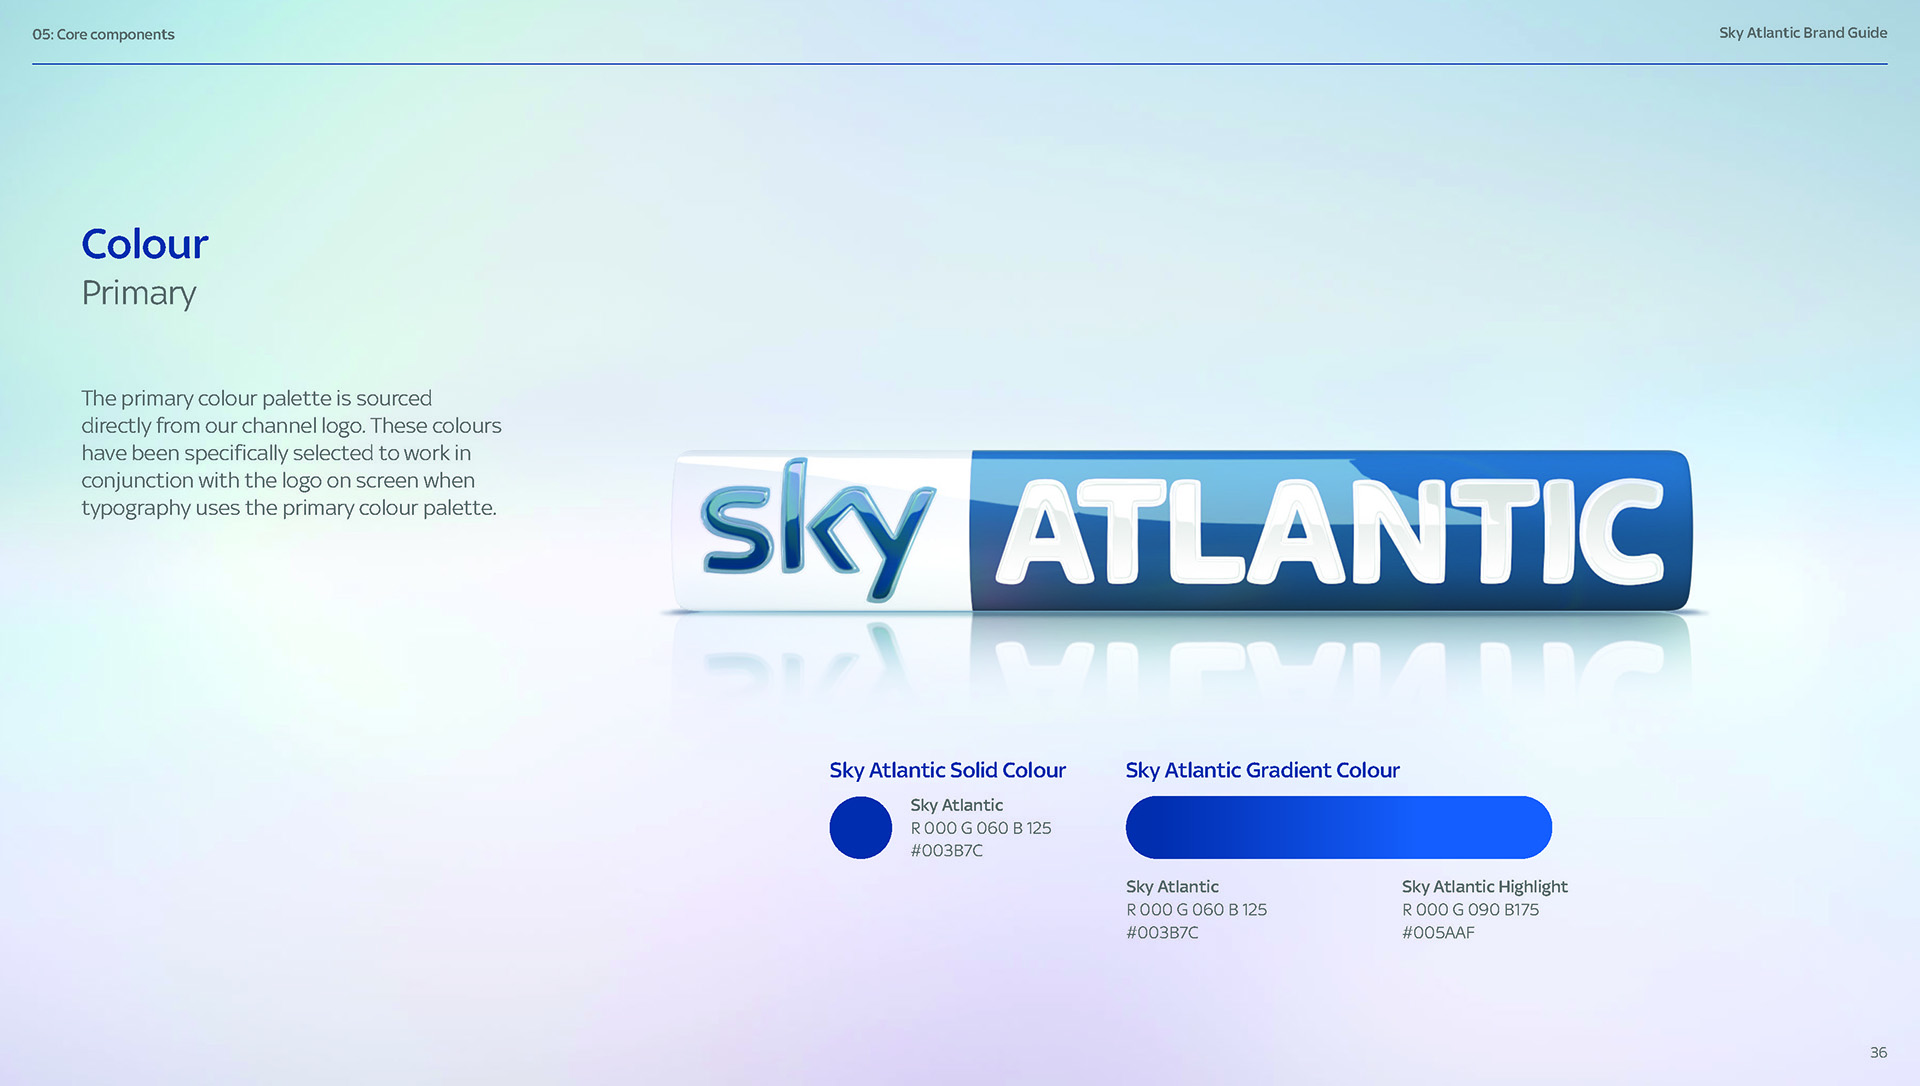 Sky_Atlantic_Brand_Guide_09_06_2016_Page_36.jpg